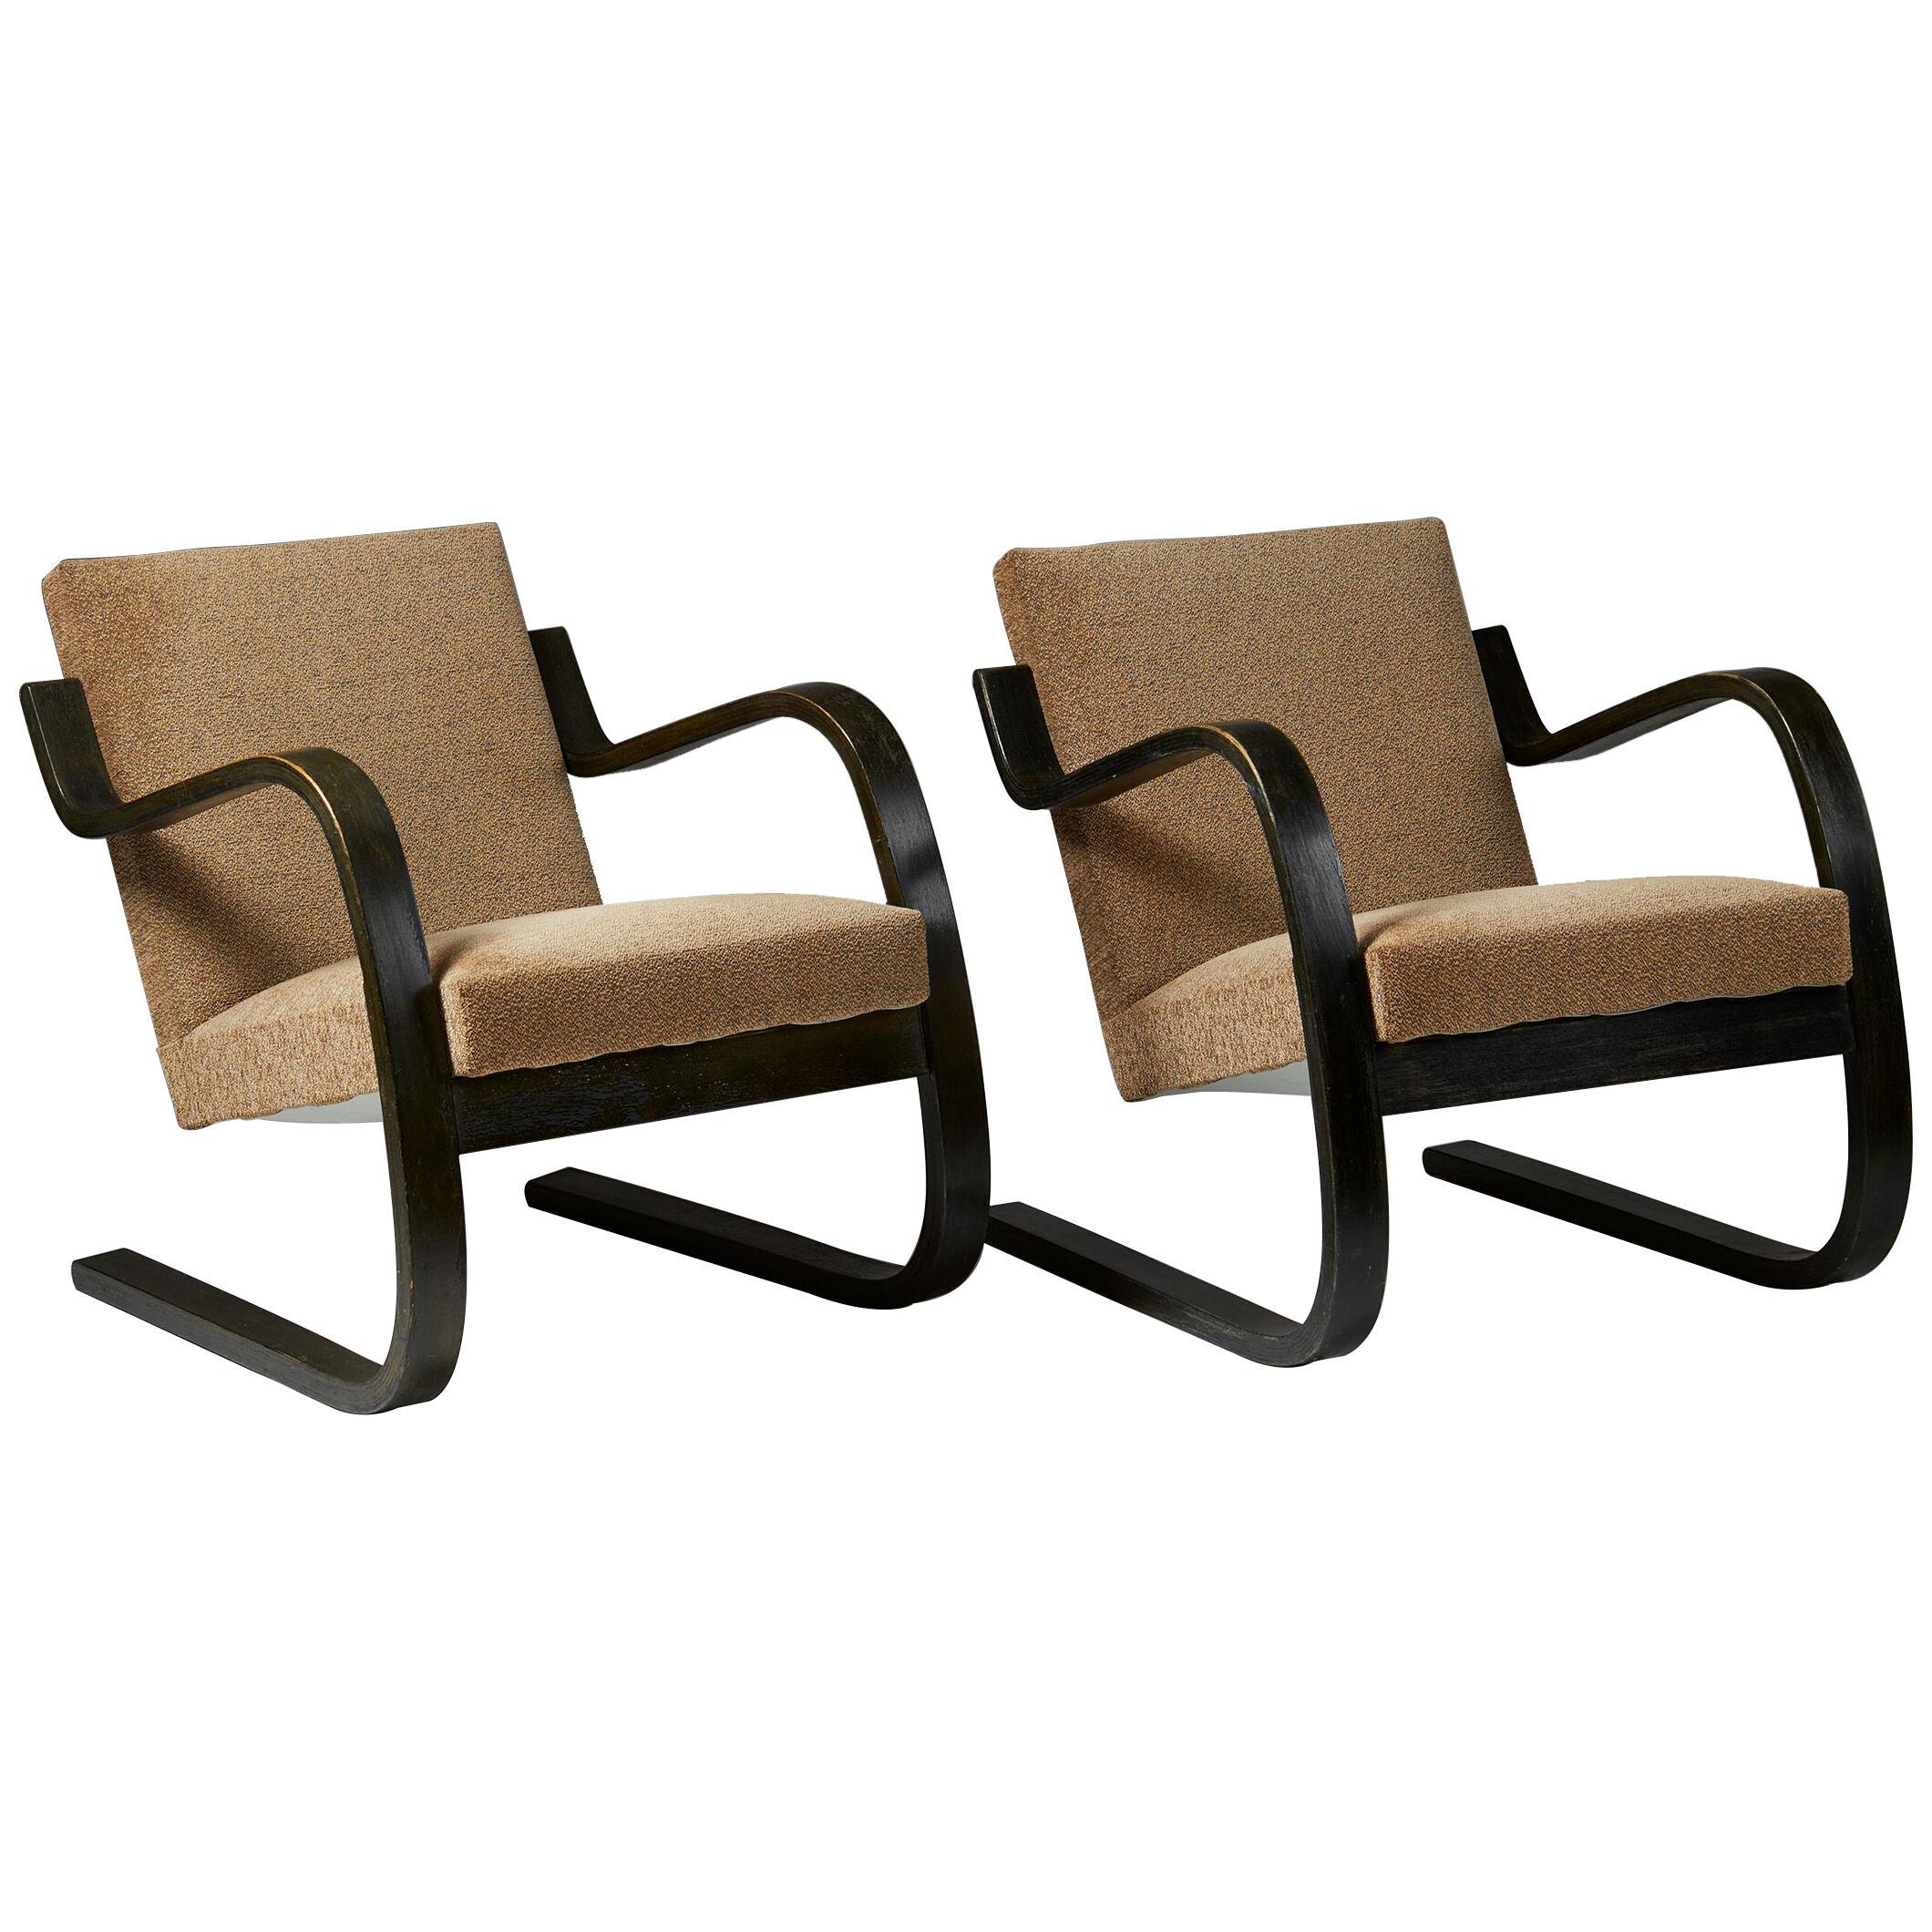 Pair of chairs ‘model 34’ designed by Alvar Aalto for Artek, Finland, 1930's.